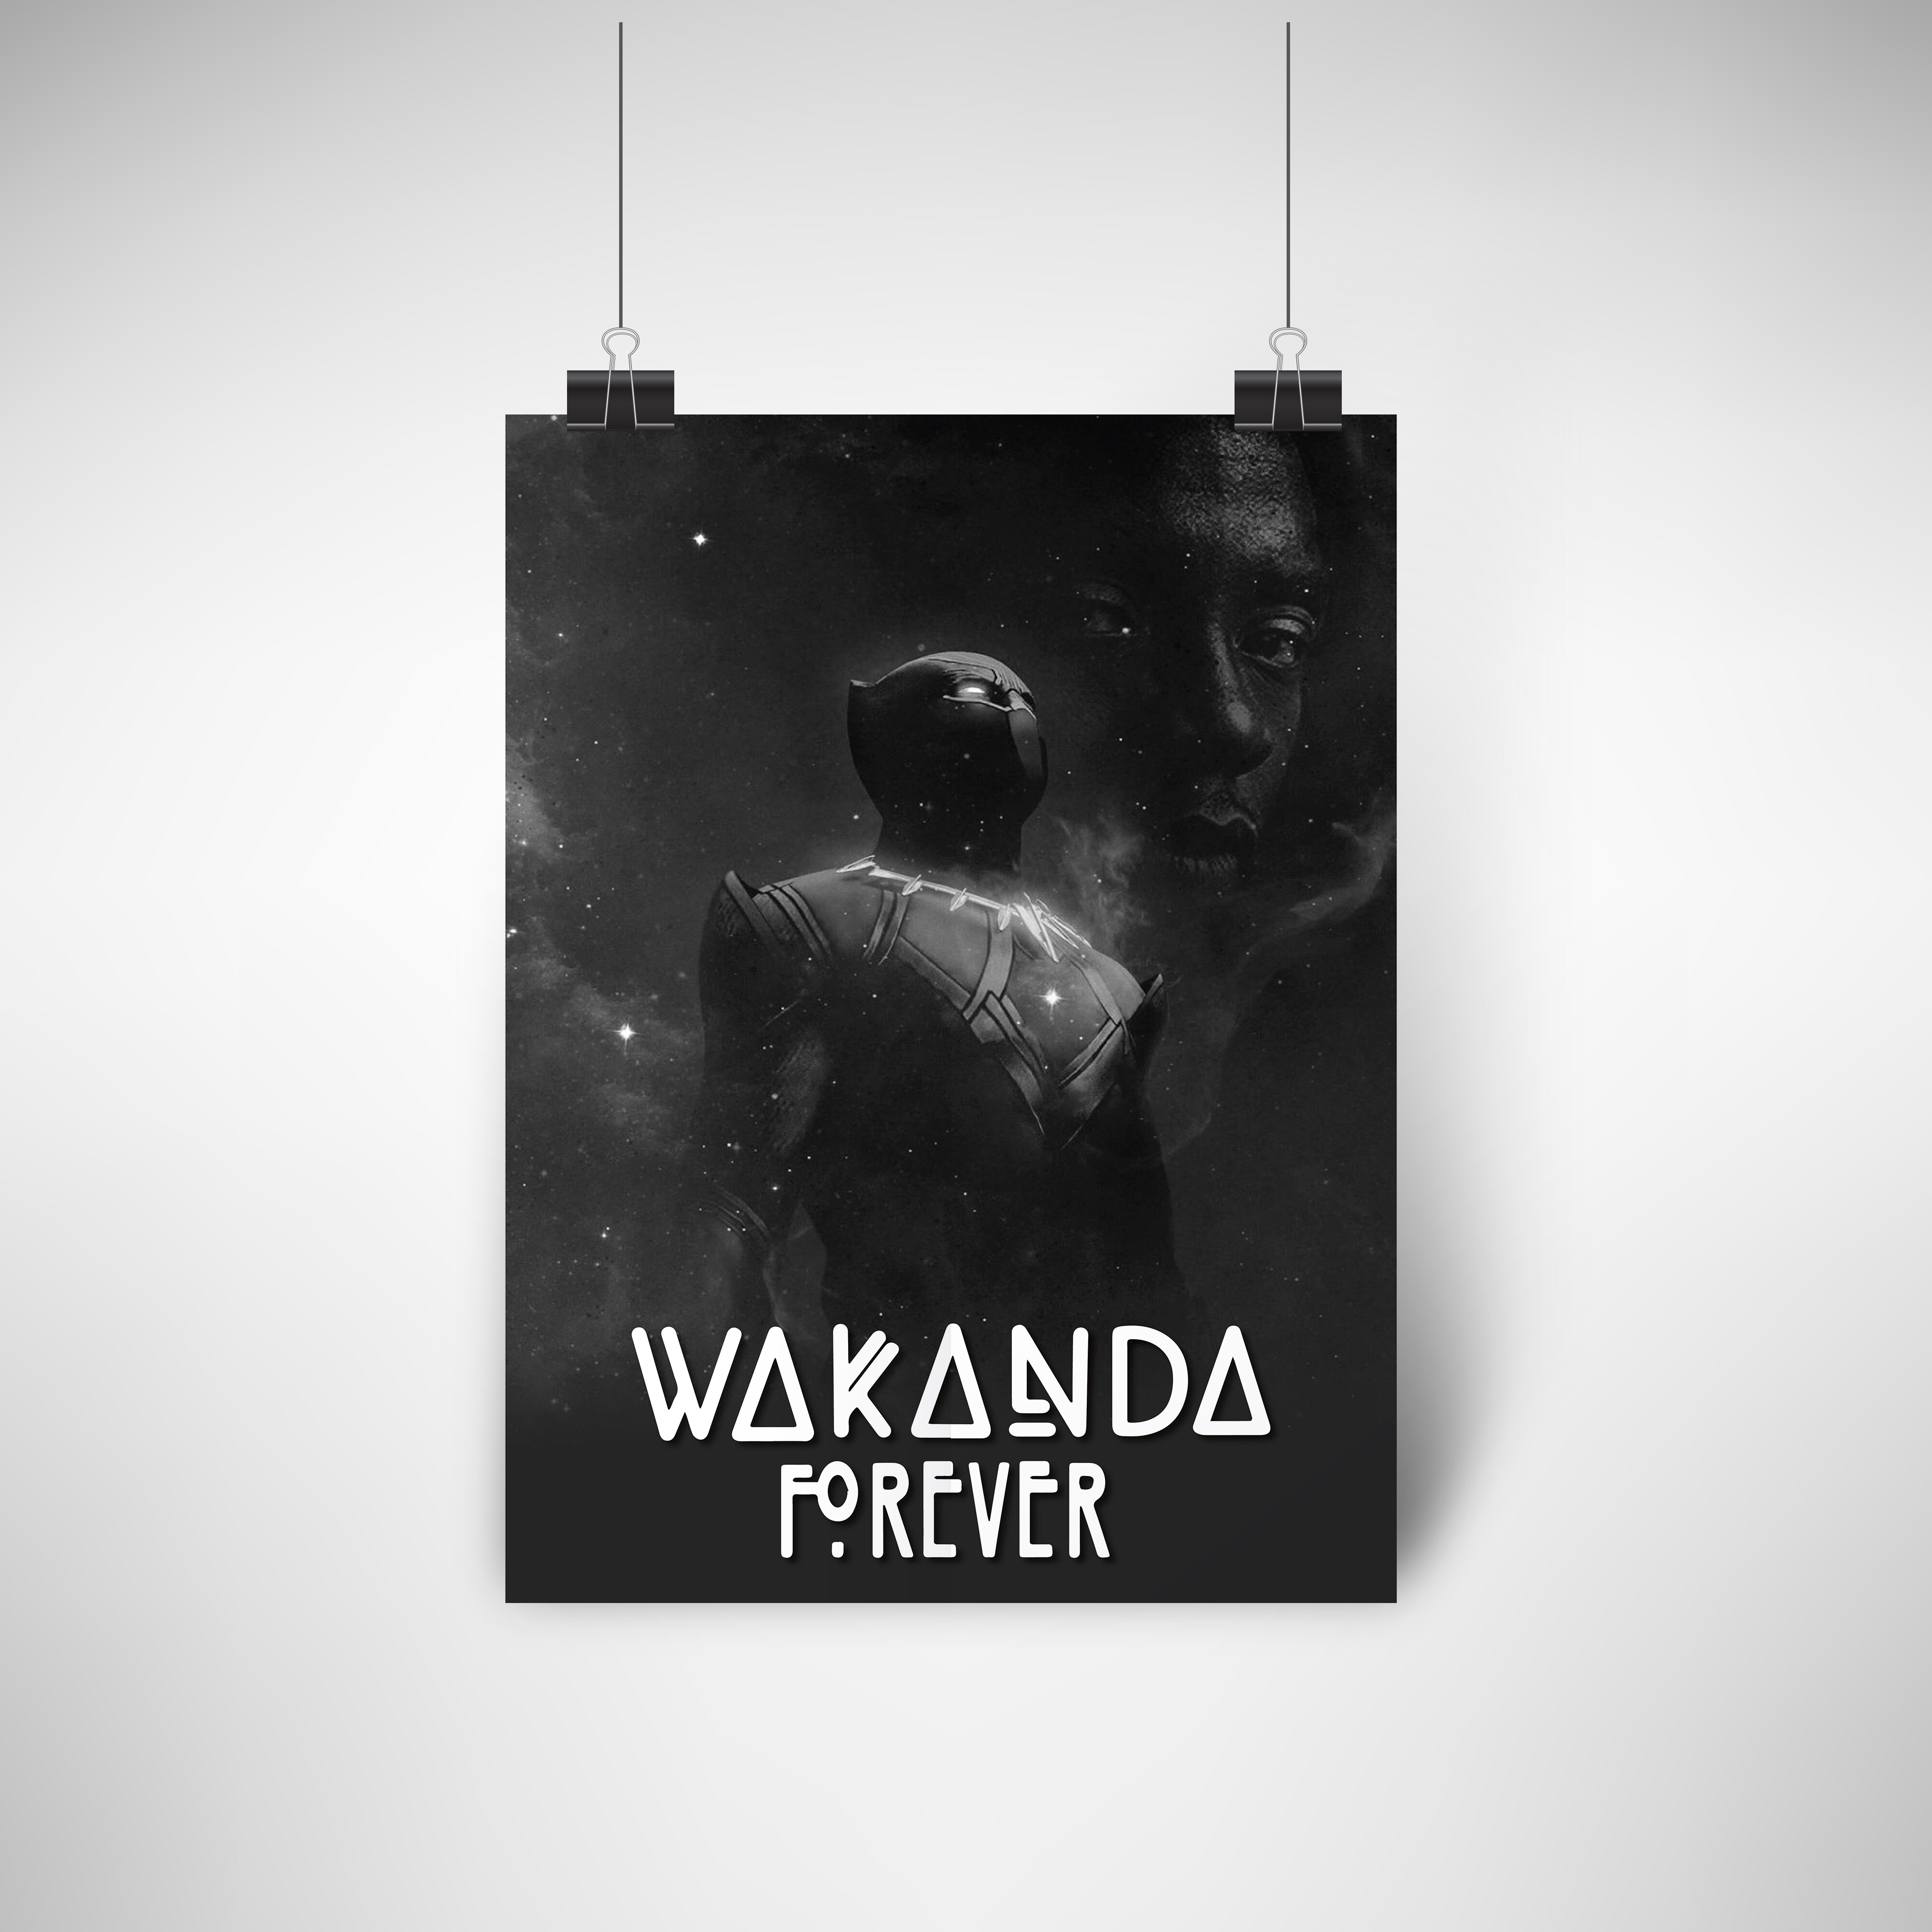 Wakanda Forever Wallpapers - Top 35 Best Wakanda Forever Wallpapers [ HQ ]